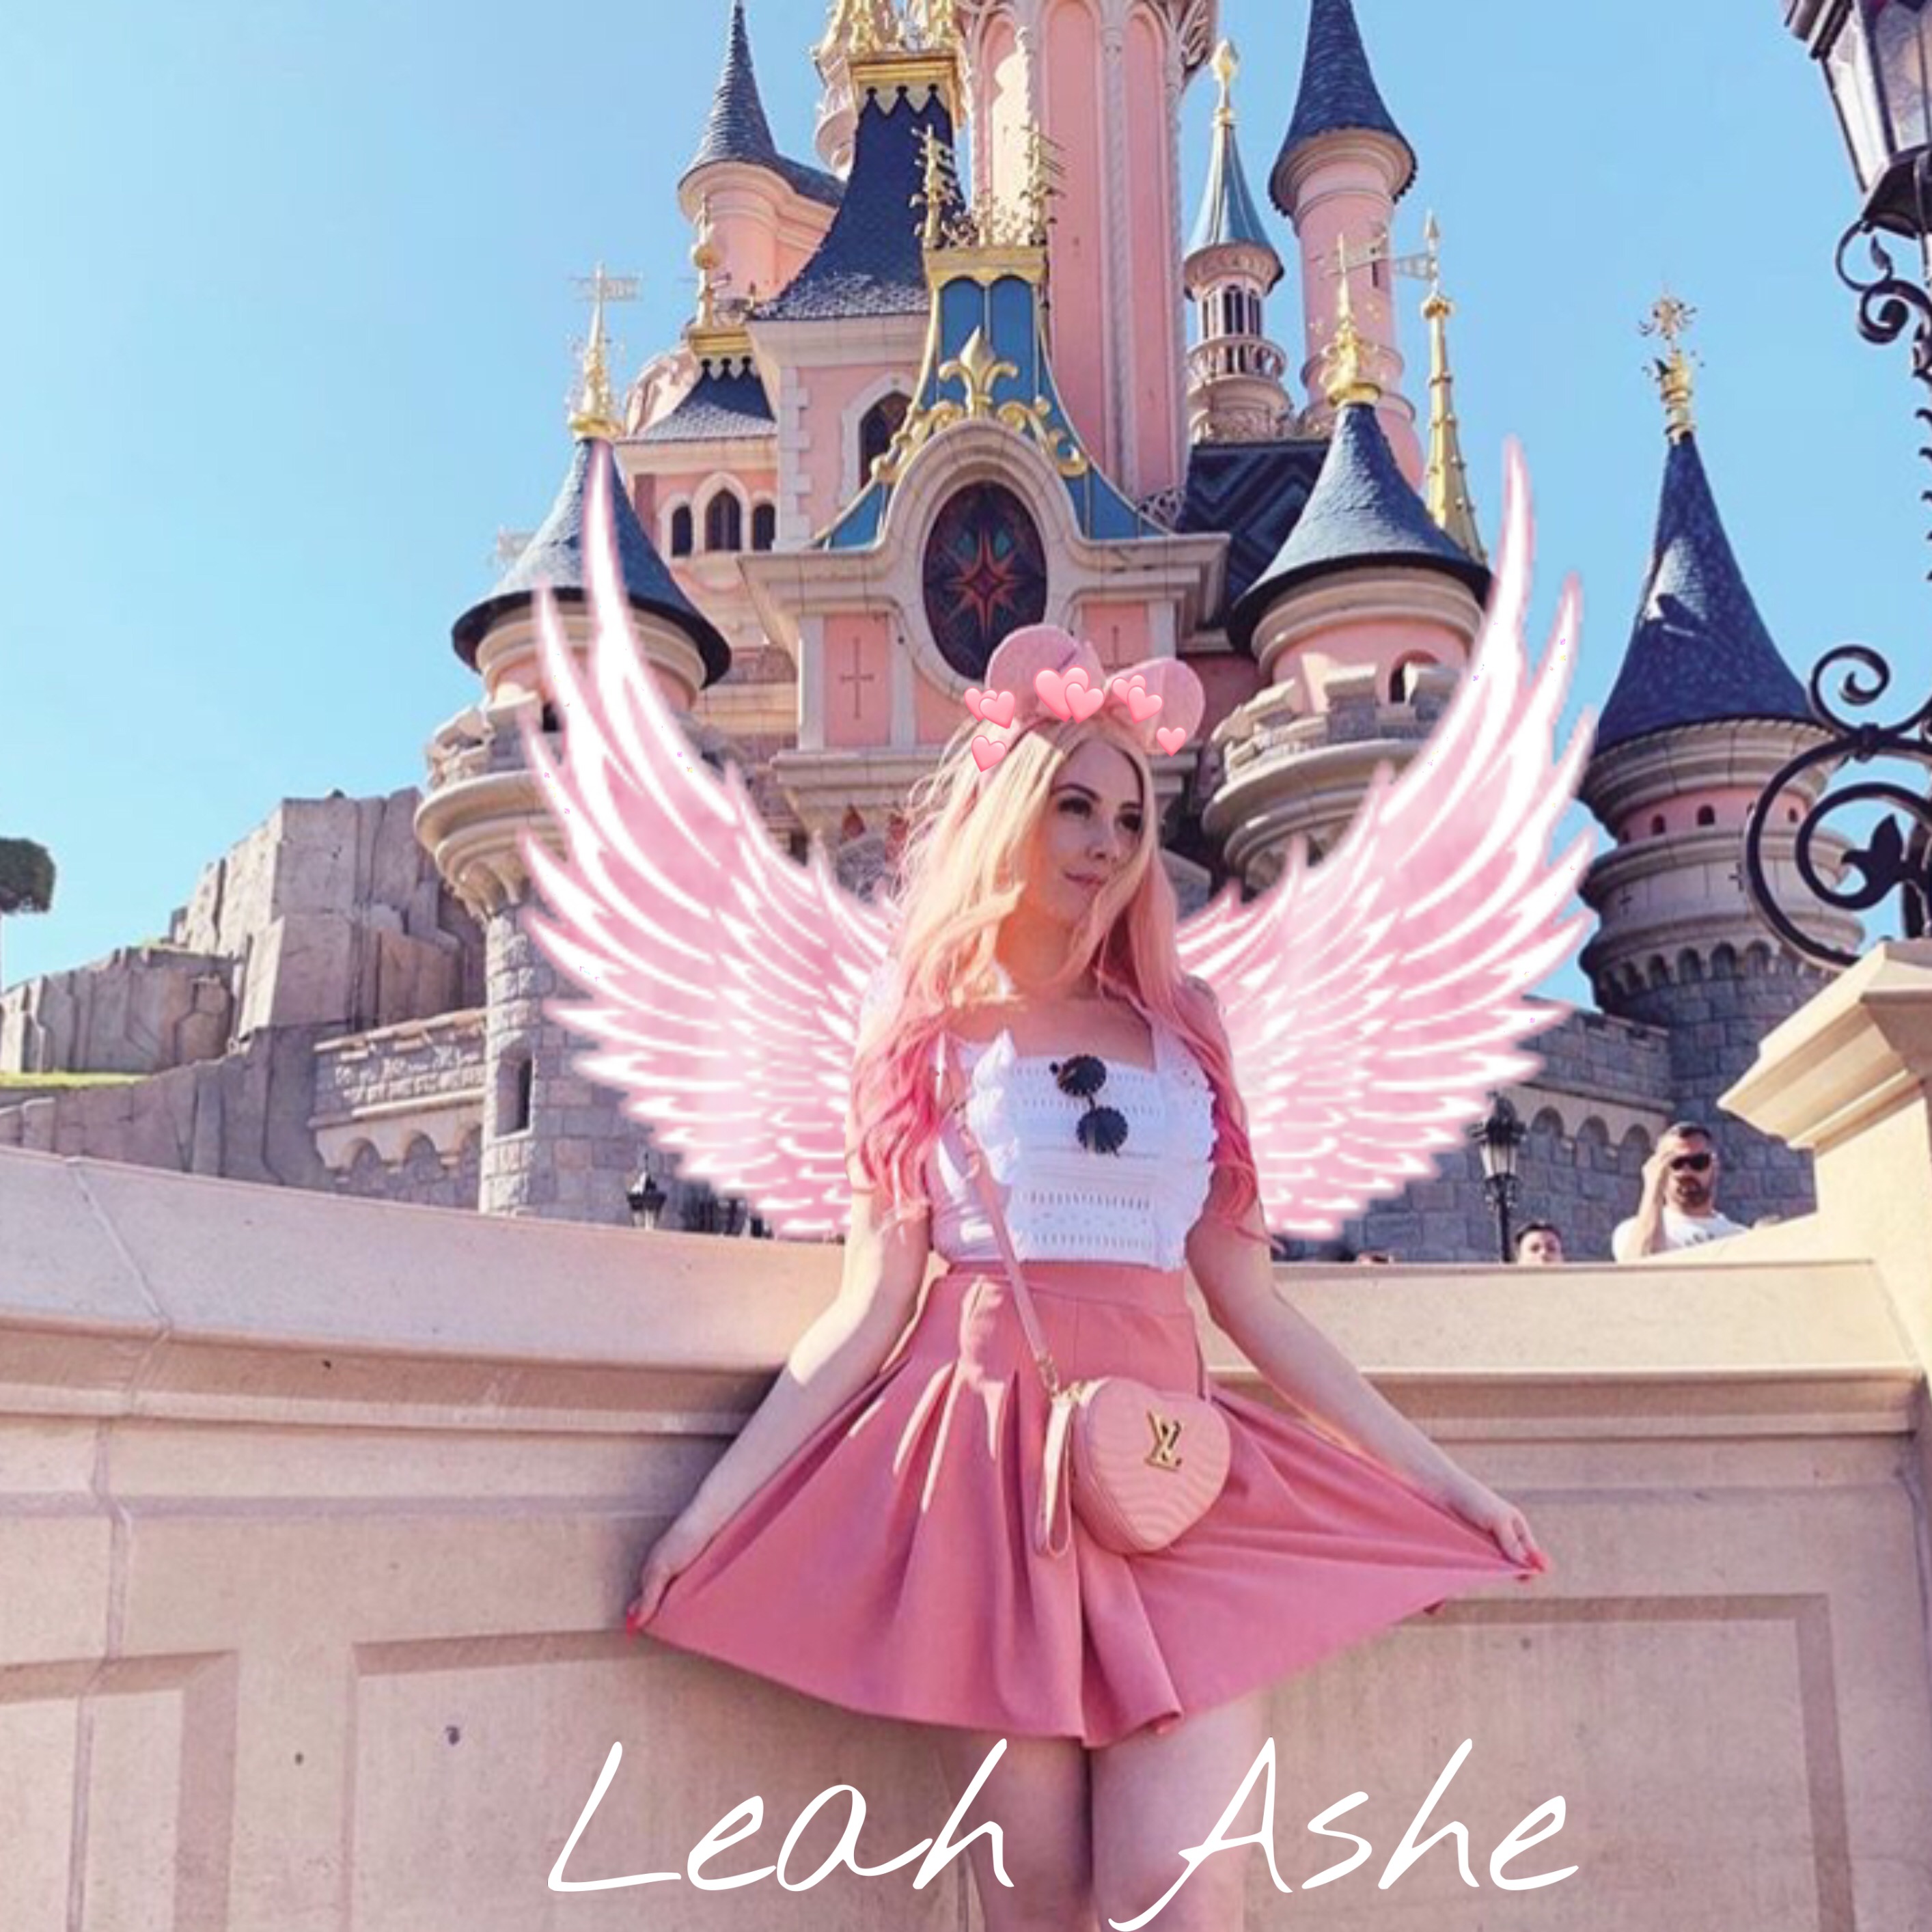 leah ashe sky castle